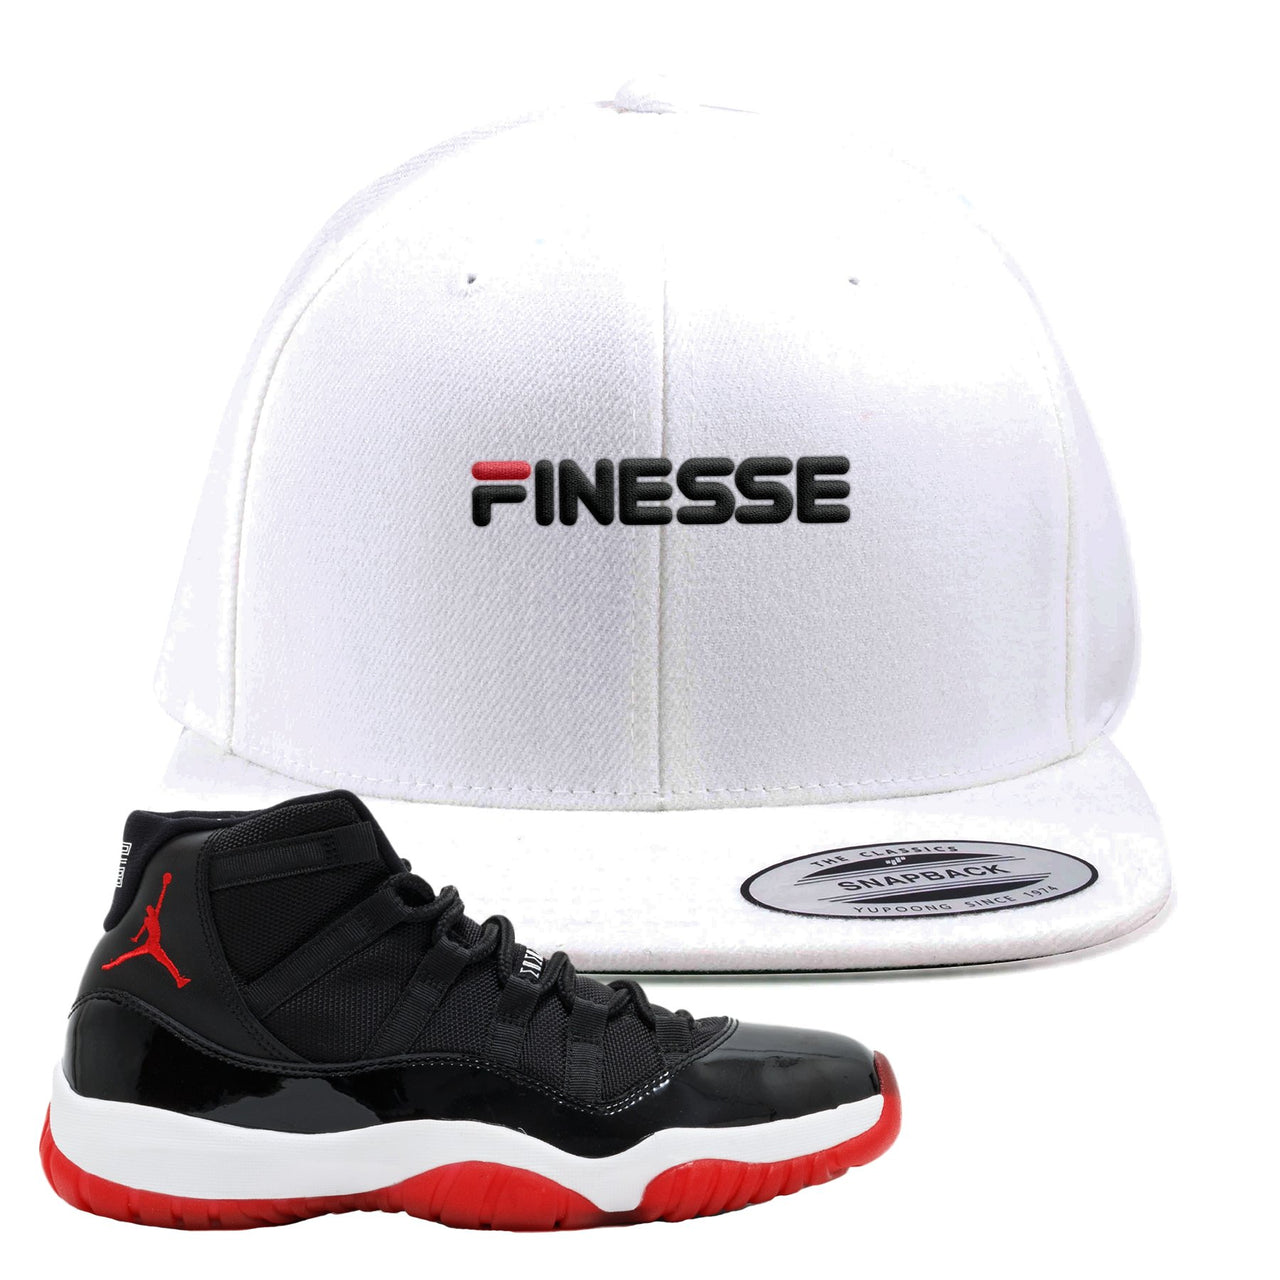 Jordan 11 Bred Finesse White Sneaker Hook Up Snapback Hat